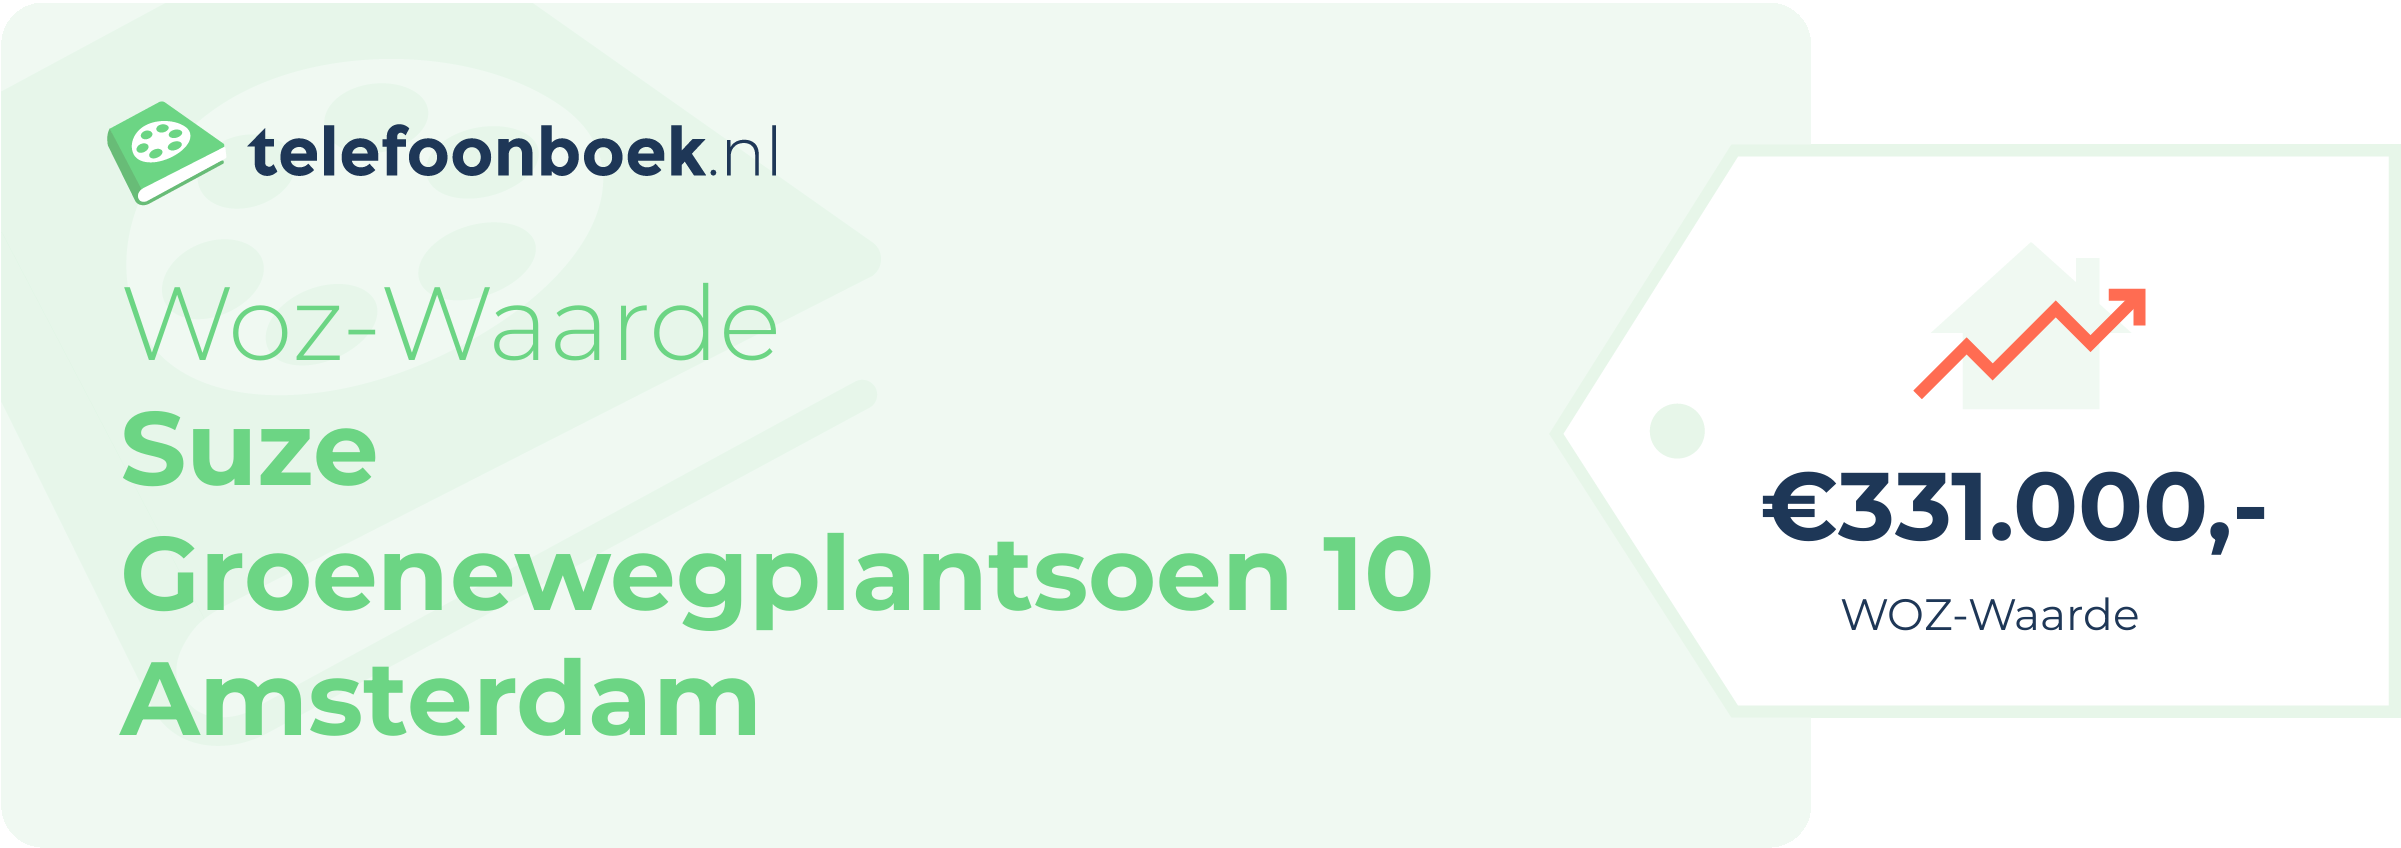 WOZ-waarde Suze Groenewegplantsoen 10 Amsterdam